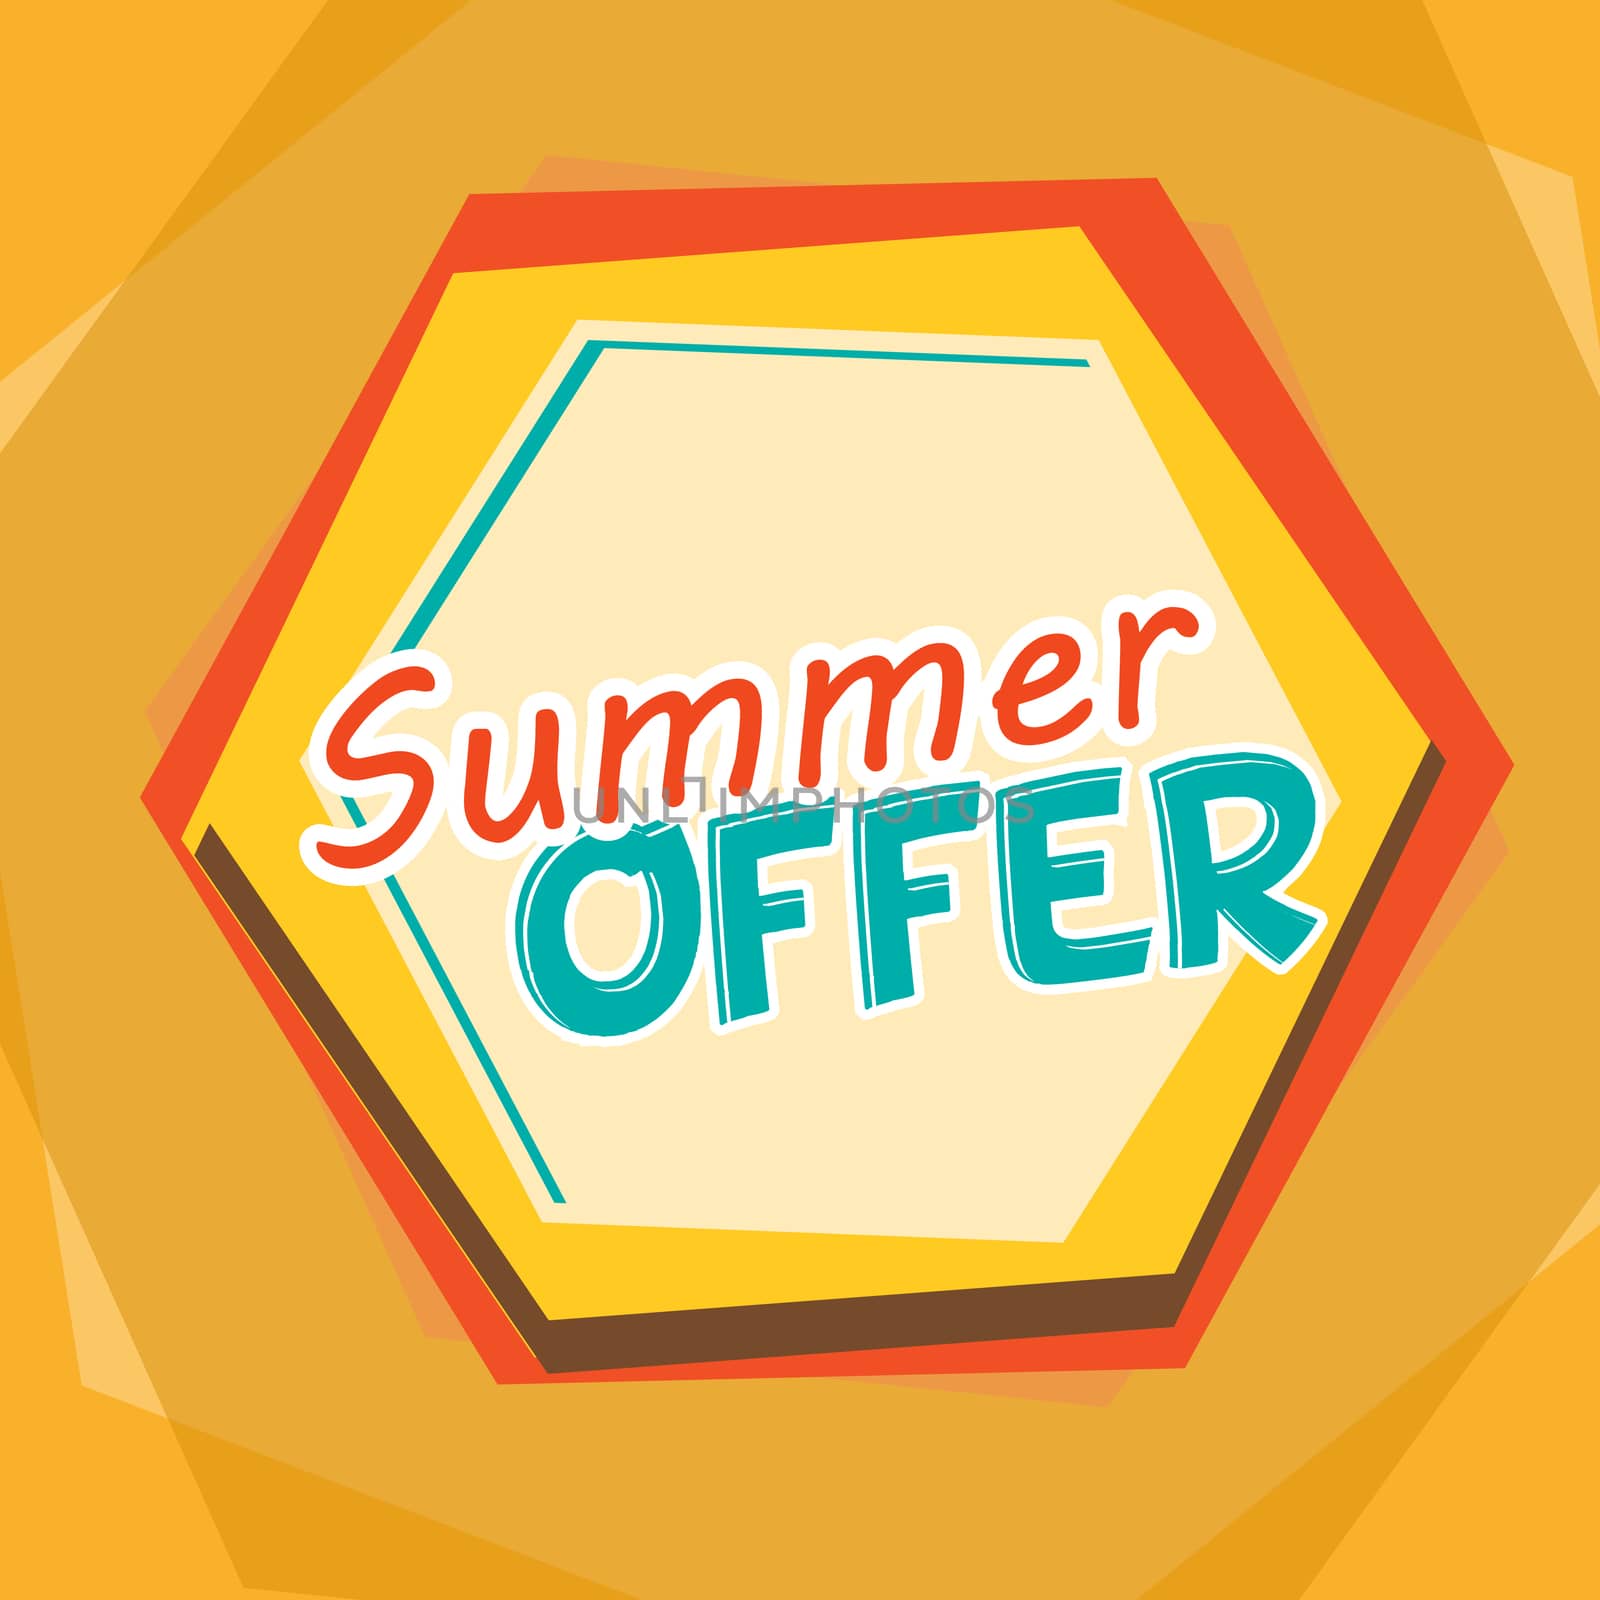 summer offer, yellow, orange and blue cartoon drawn label by marinini